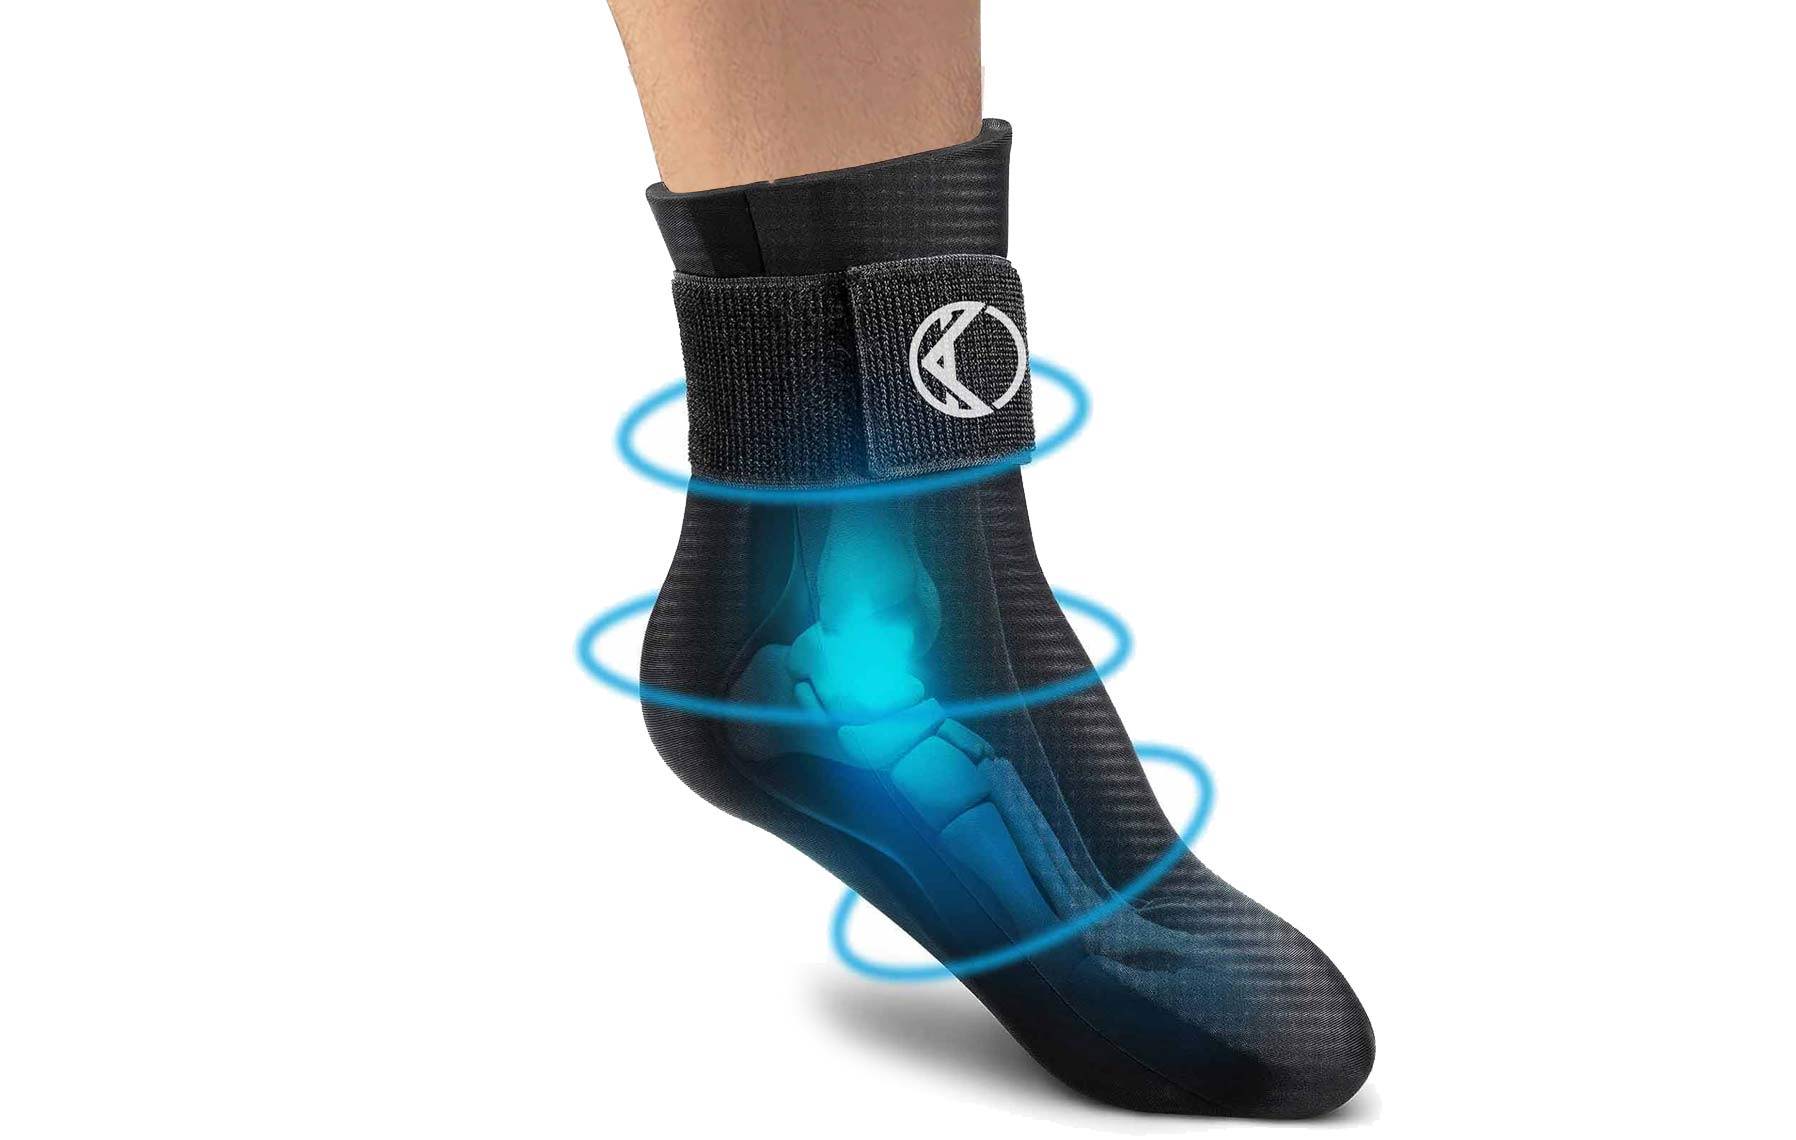 Mens knee high compression socks by Koprez.